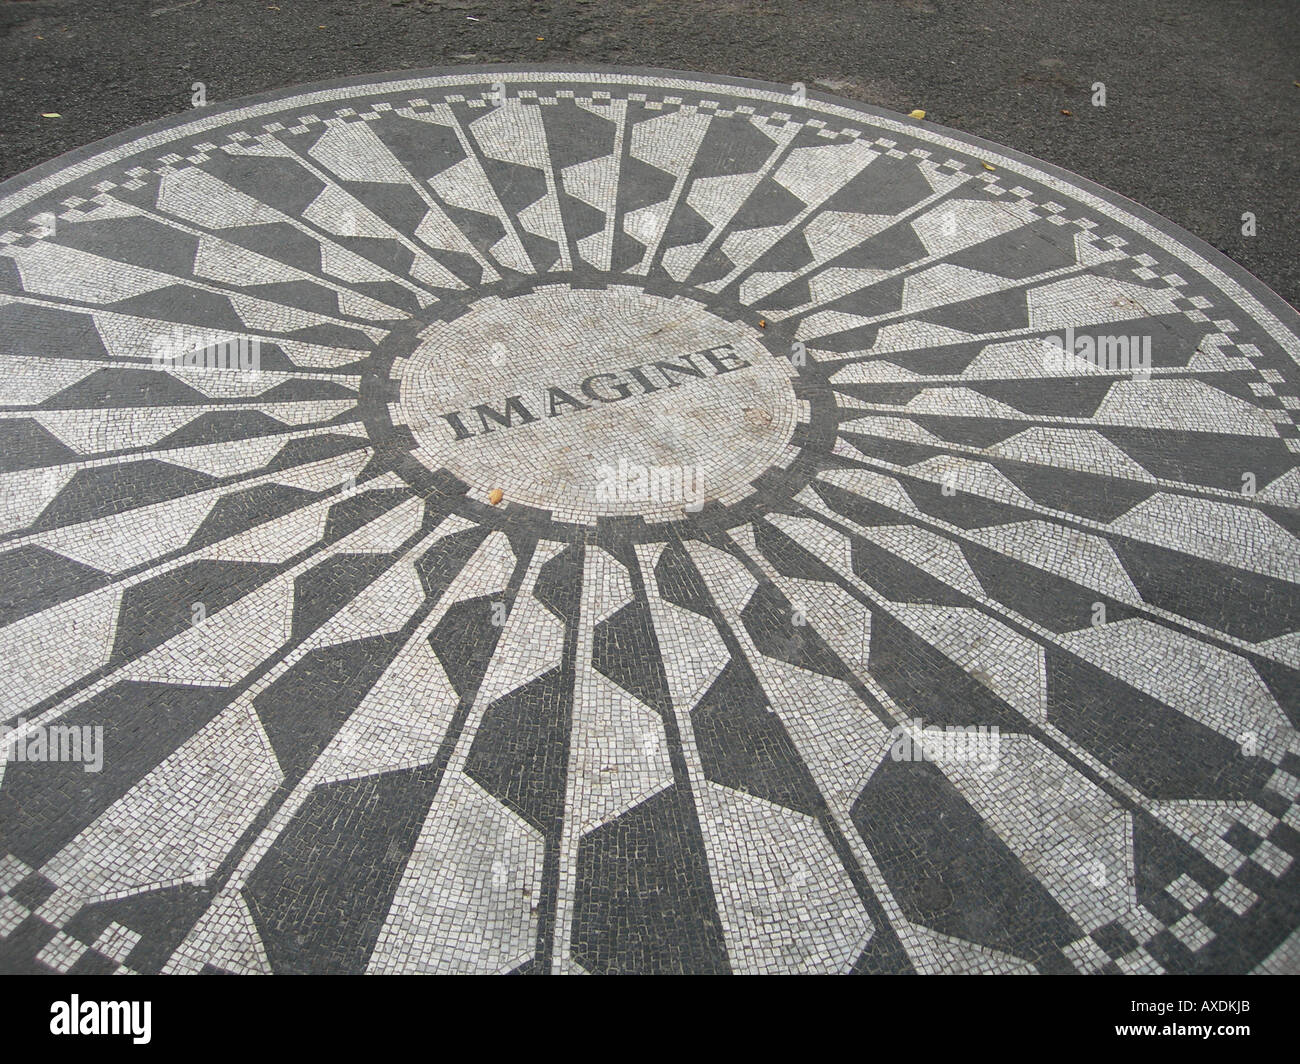 Pavement memorial mosaic Imagine to John Lennon in New York. Stock Photo